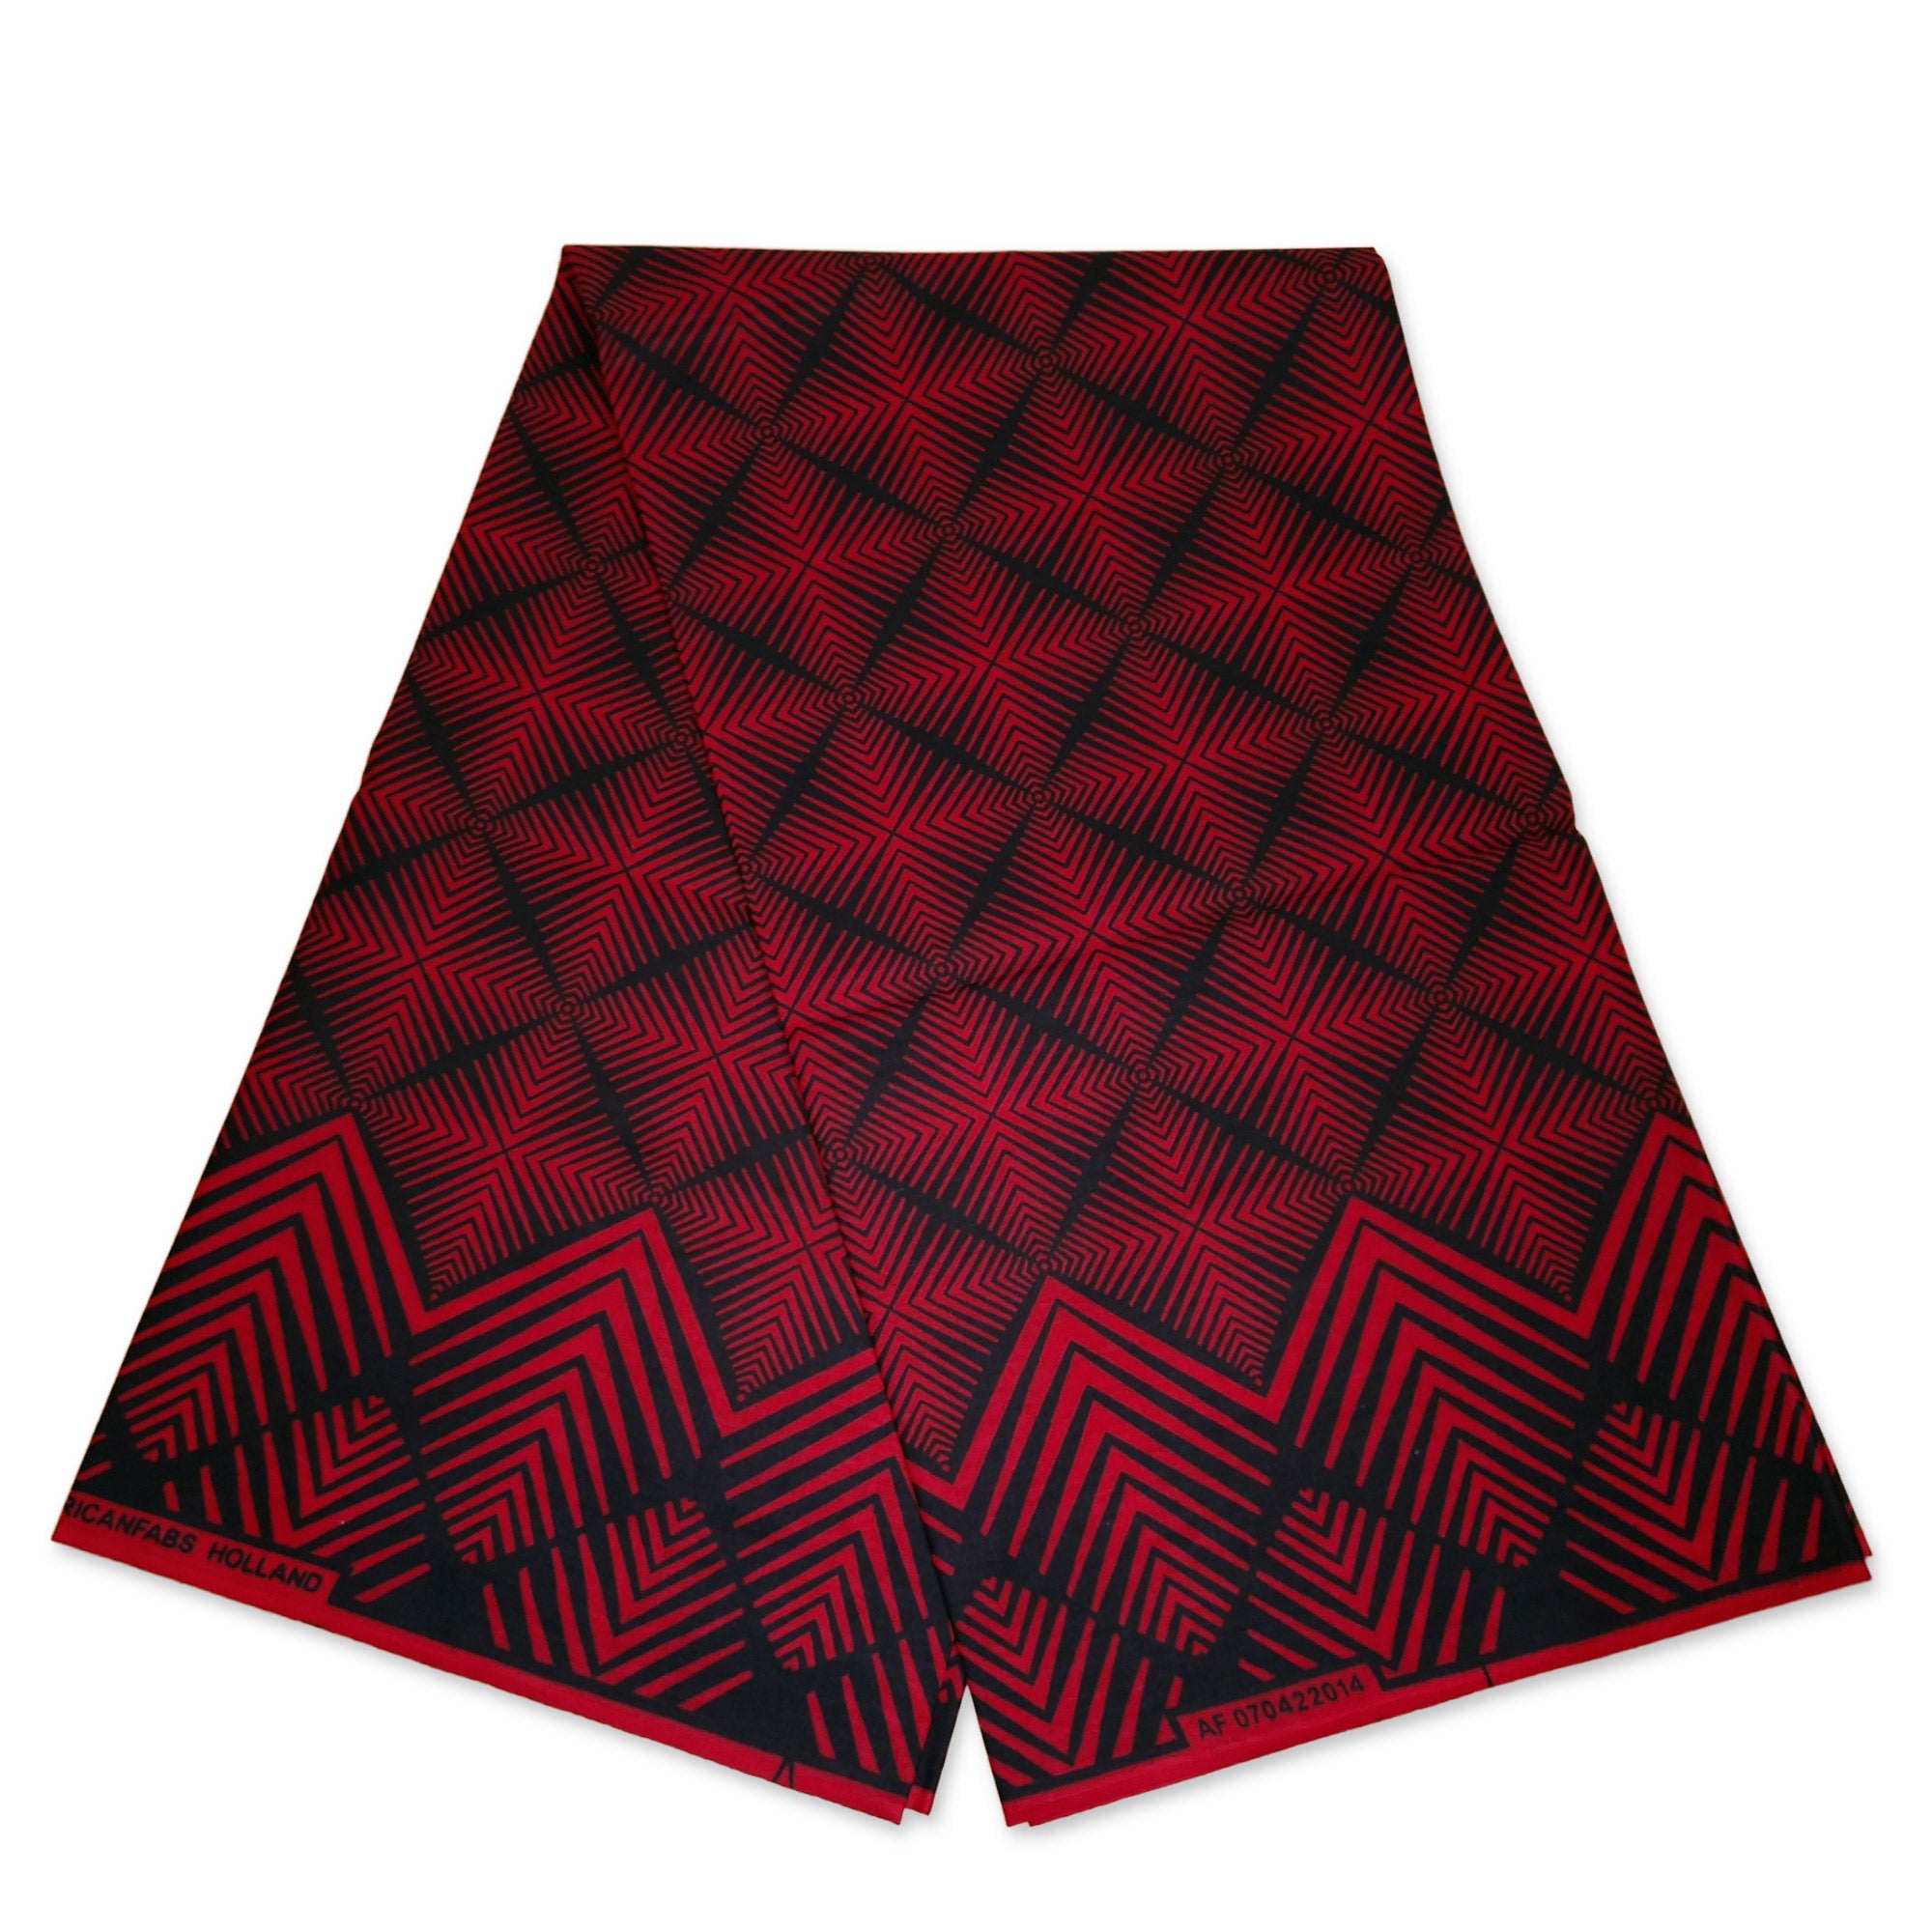 Afrikanischer Print Stoff - Rot fade effect - 100% Baumwolle